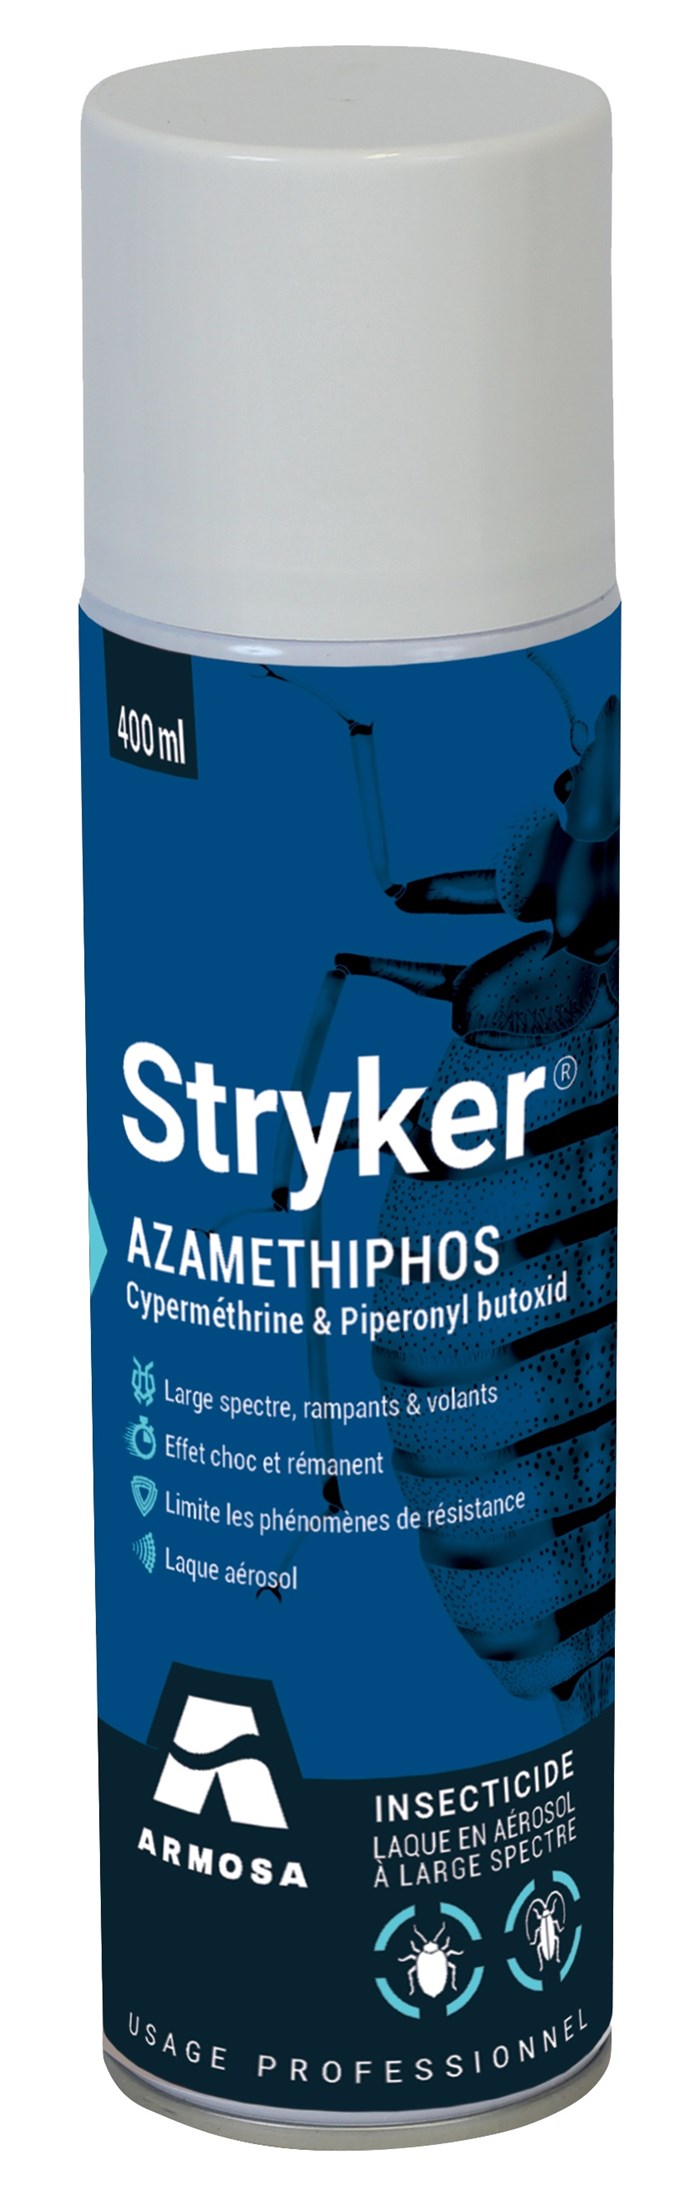 IN-AZA-23003 - AEROSOL STRYKER - 400mL_OK